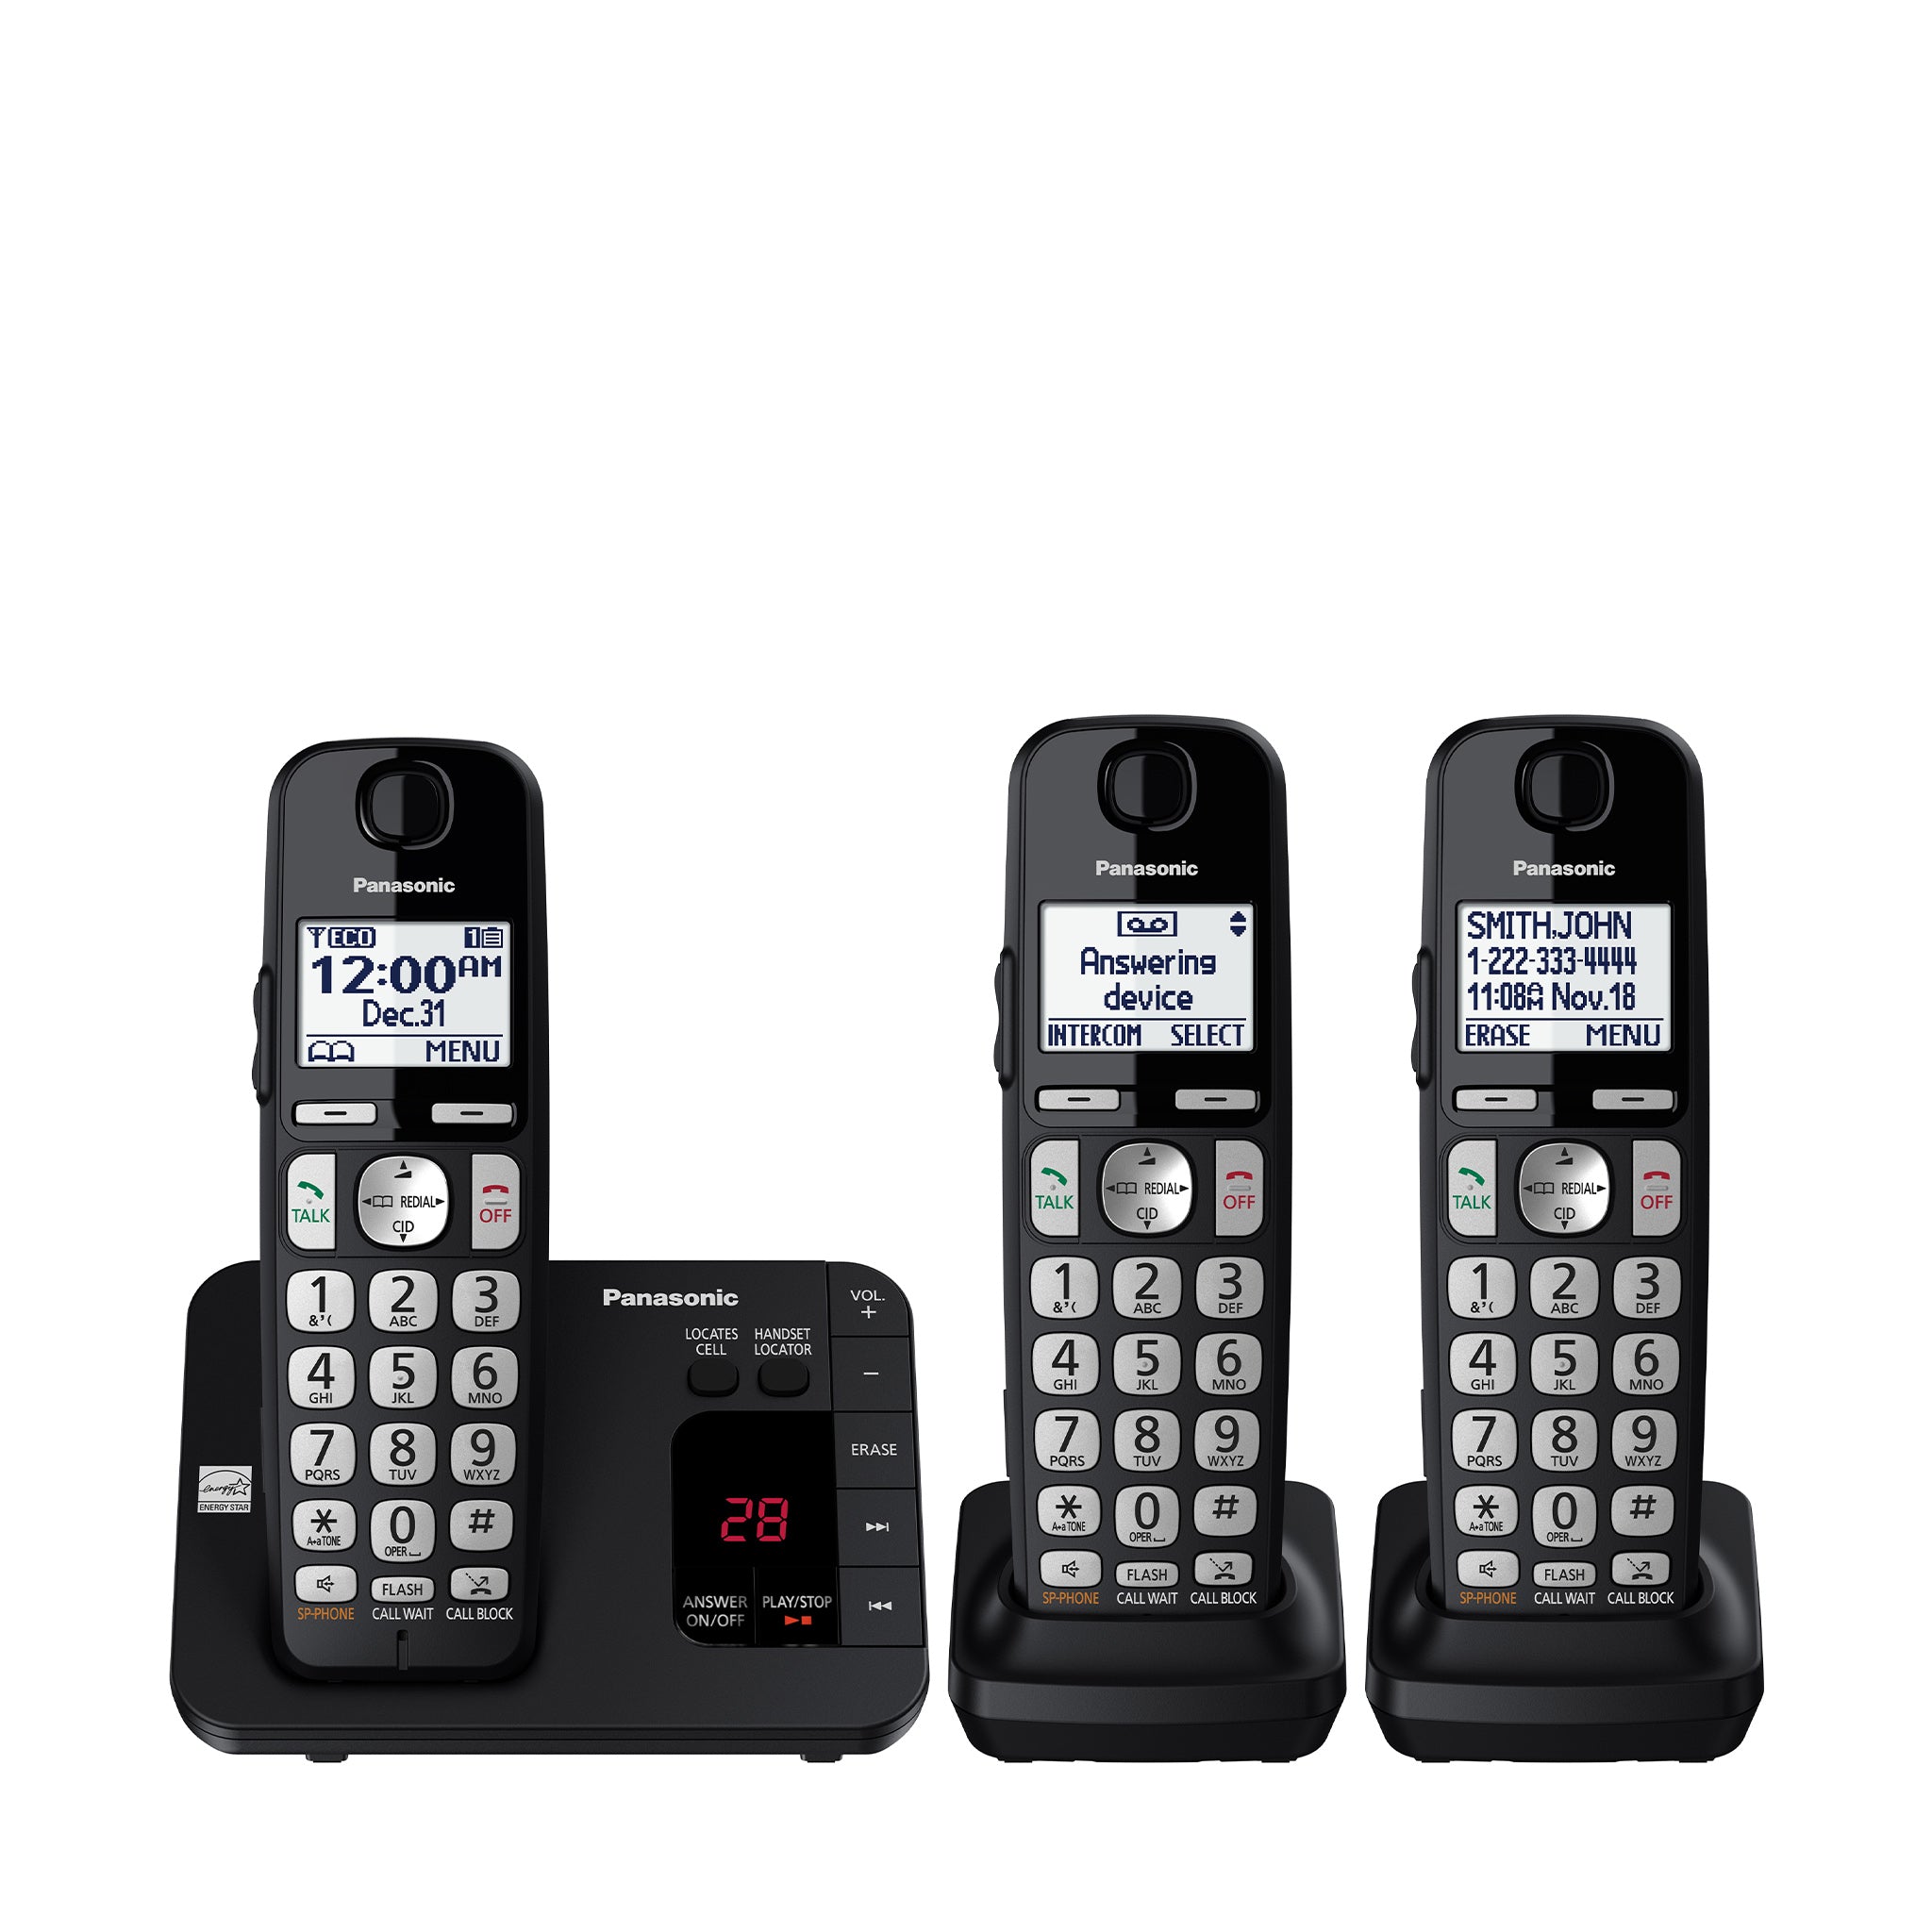  Teléfono inalámbrico Panasonic KX-TGE433B con